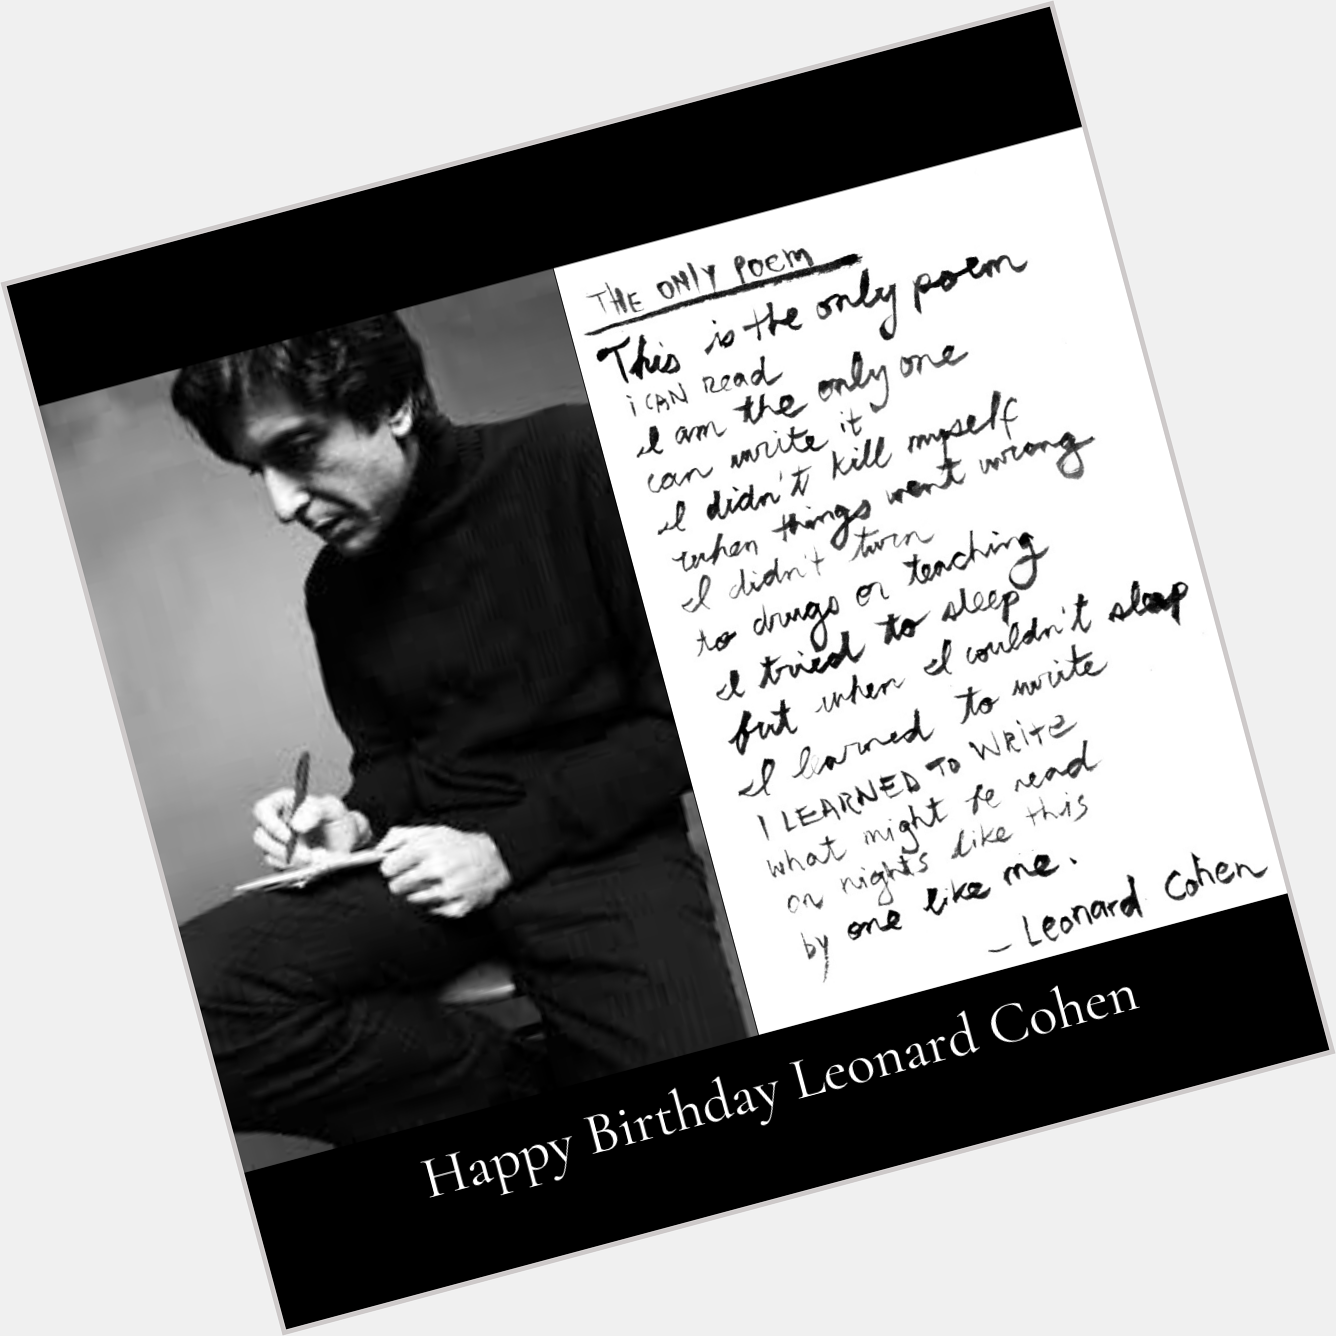 Happy Birthday, Leonard Cohen!  